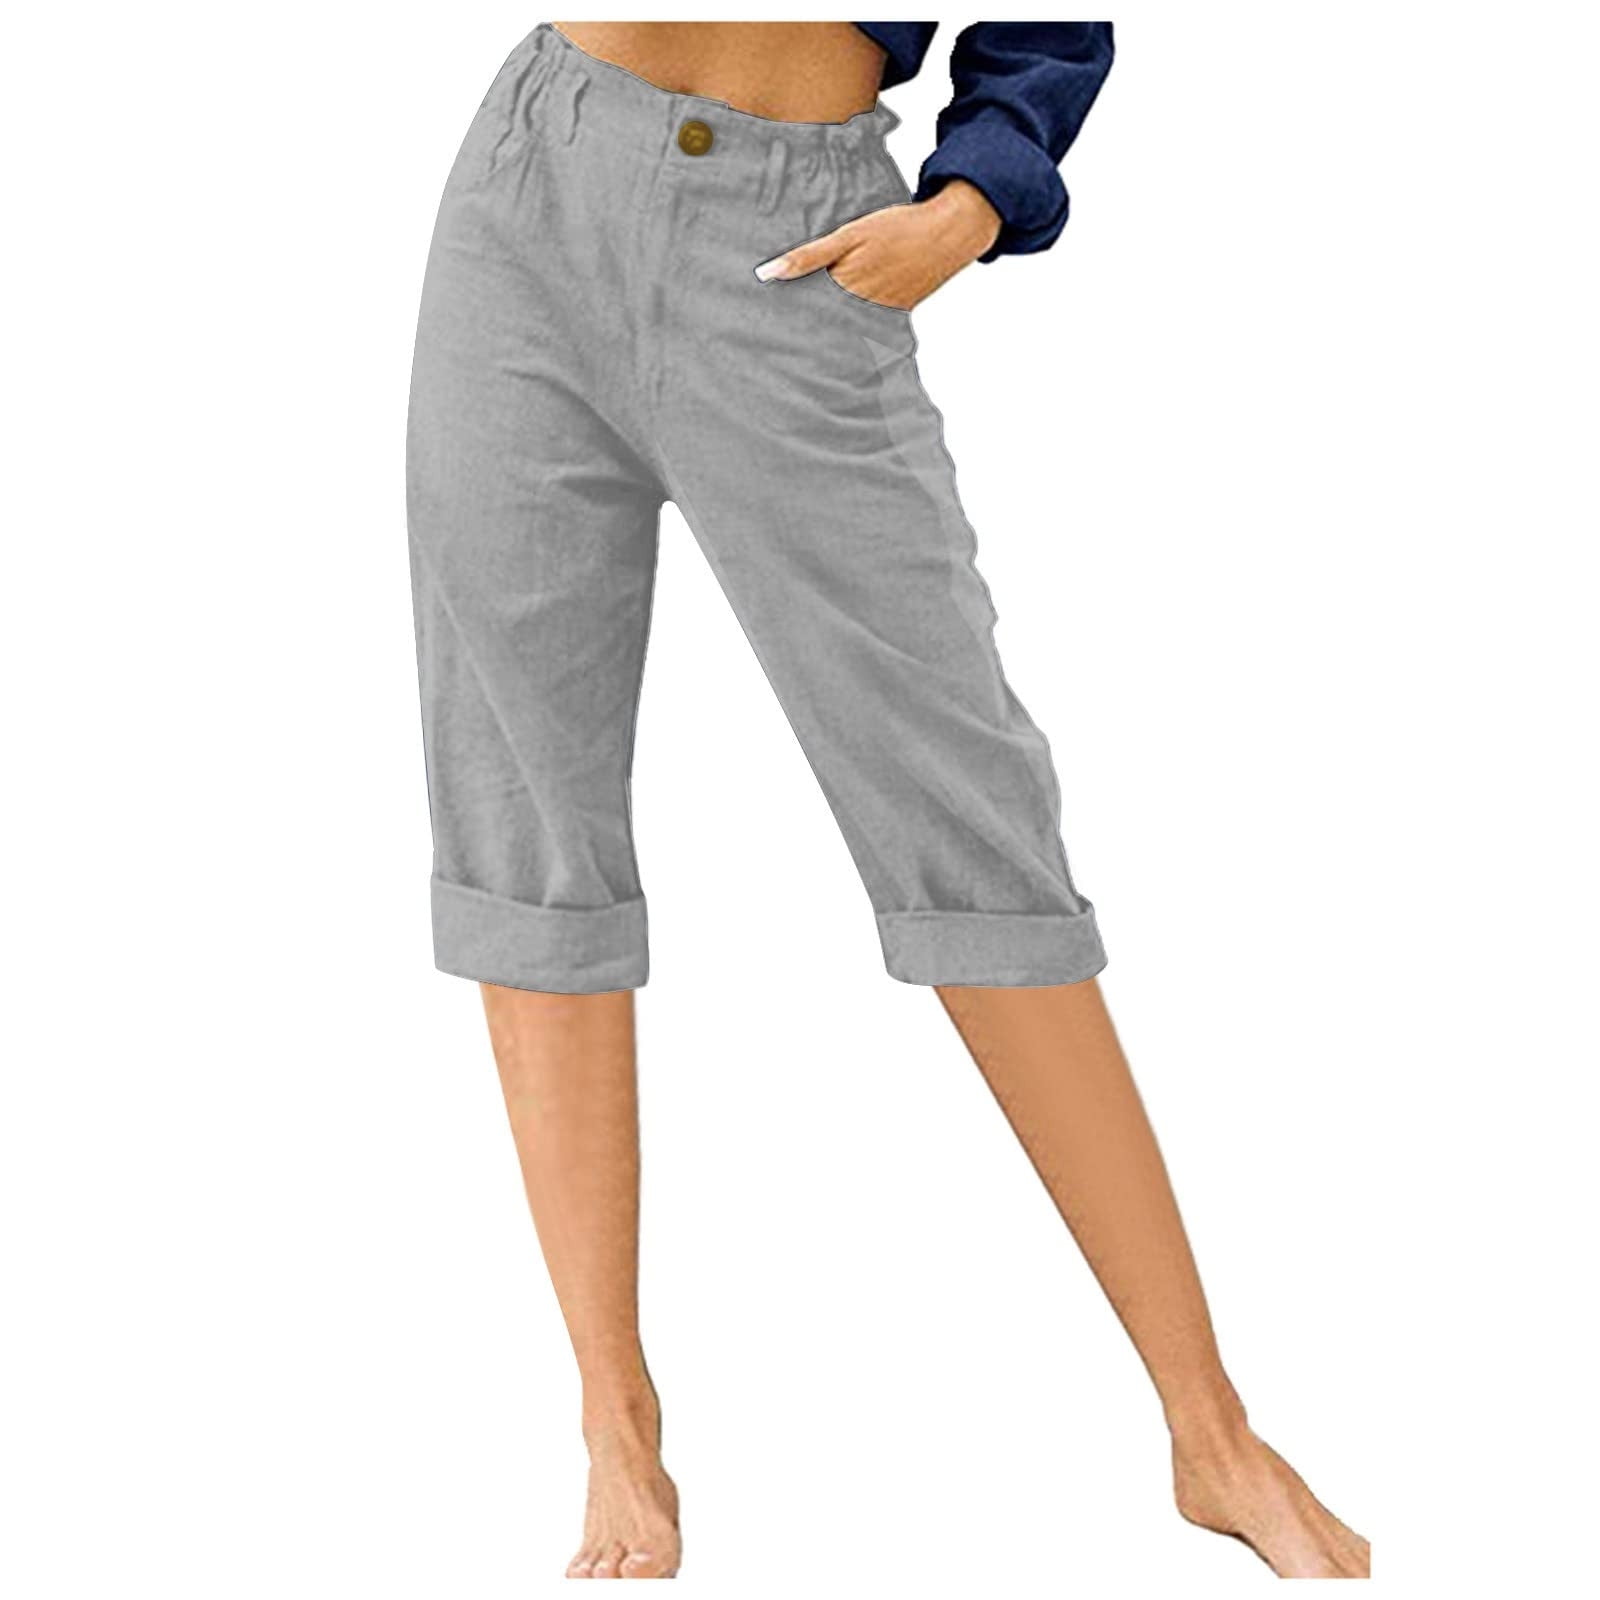 pbnbp Linen Pants Women Summer Casual Clearance Petite Dress Slacks ...